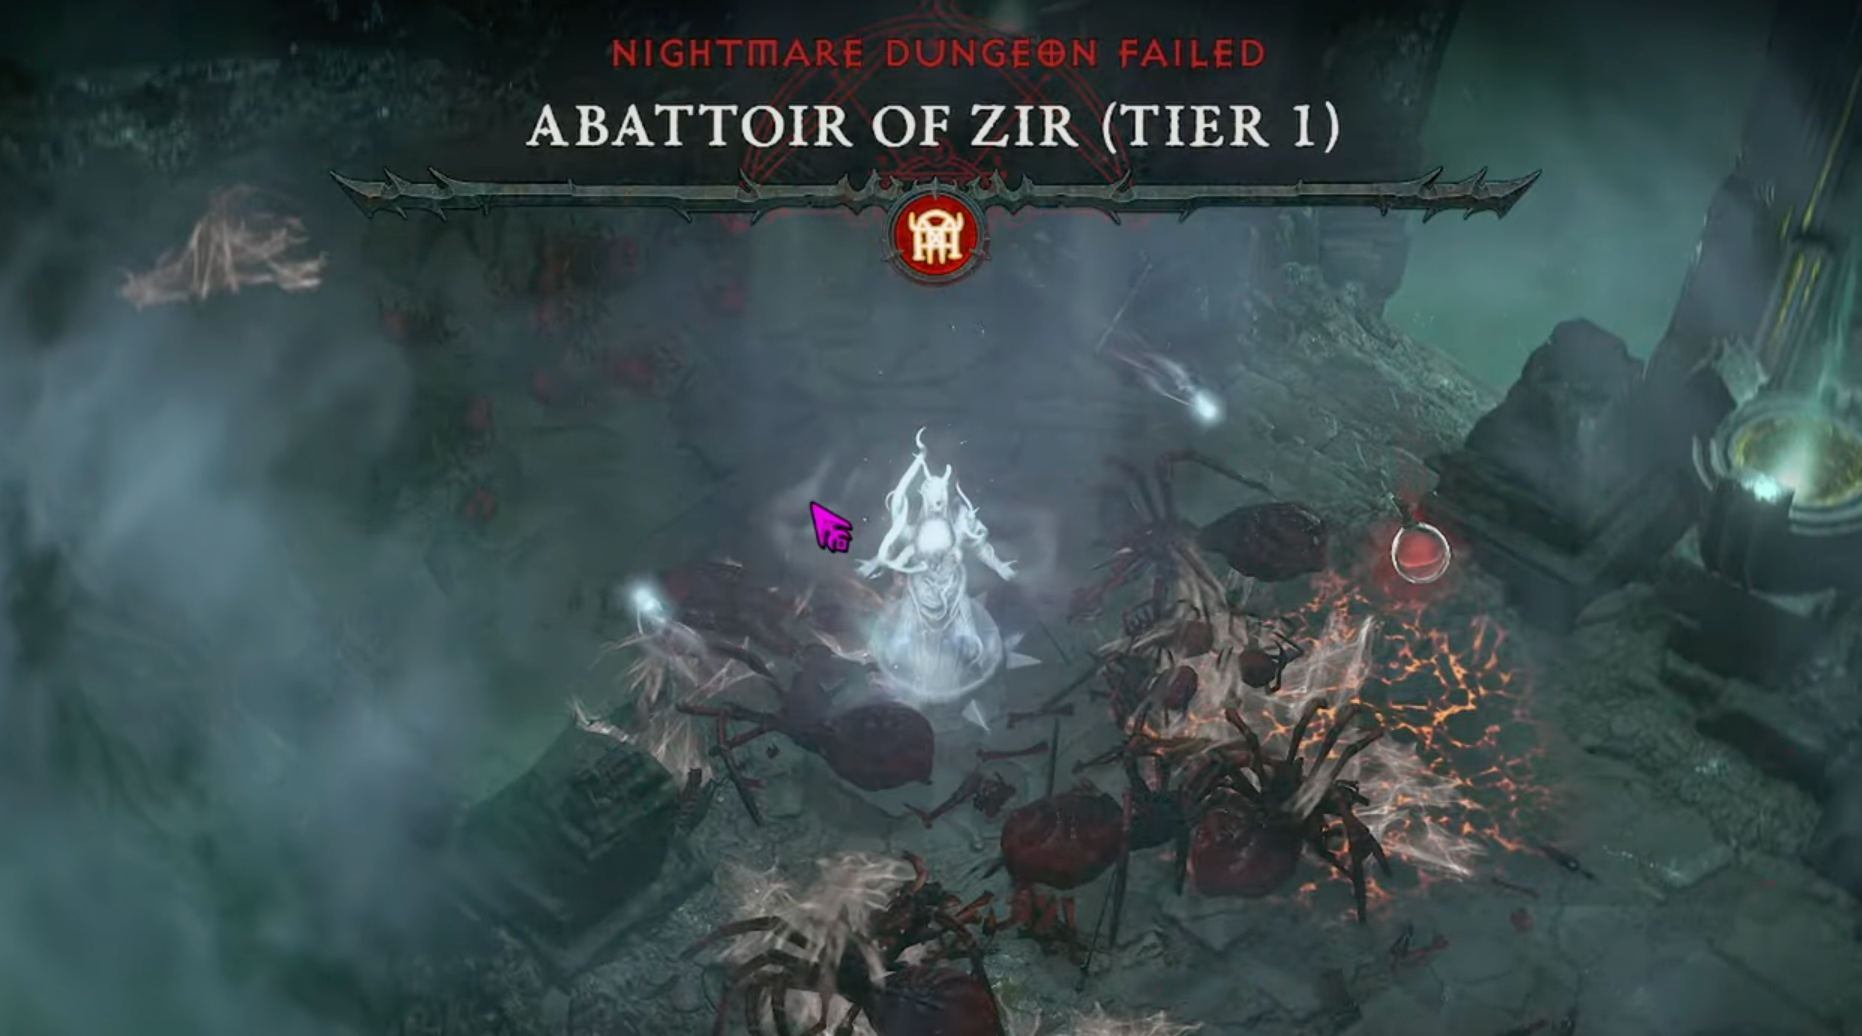 Player dying in the Abattoir of Zir